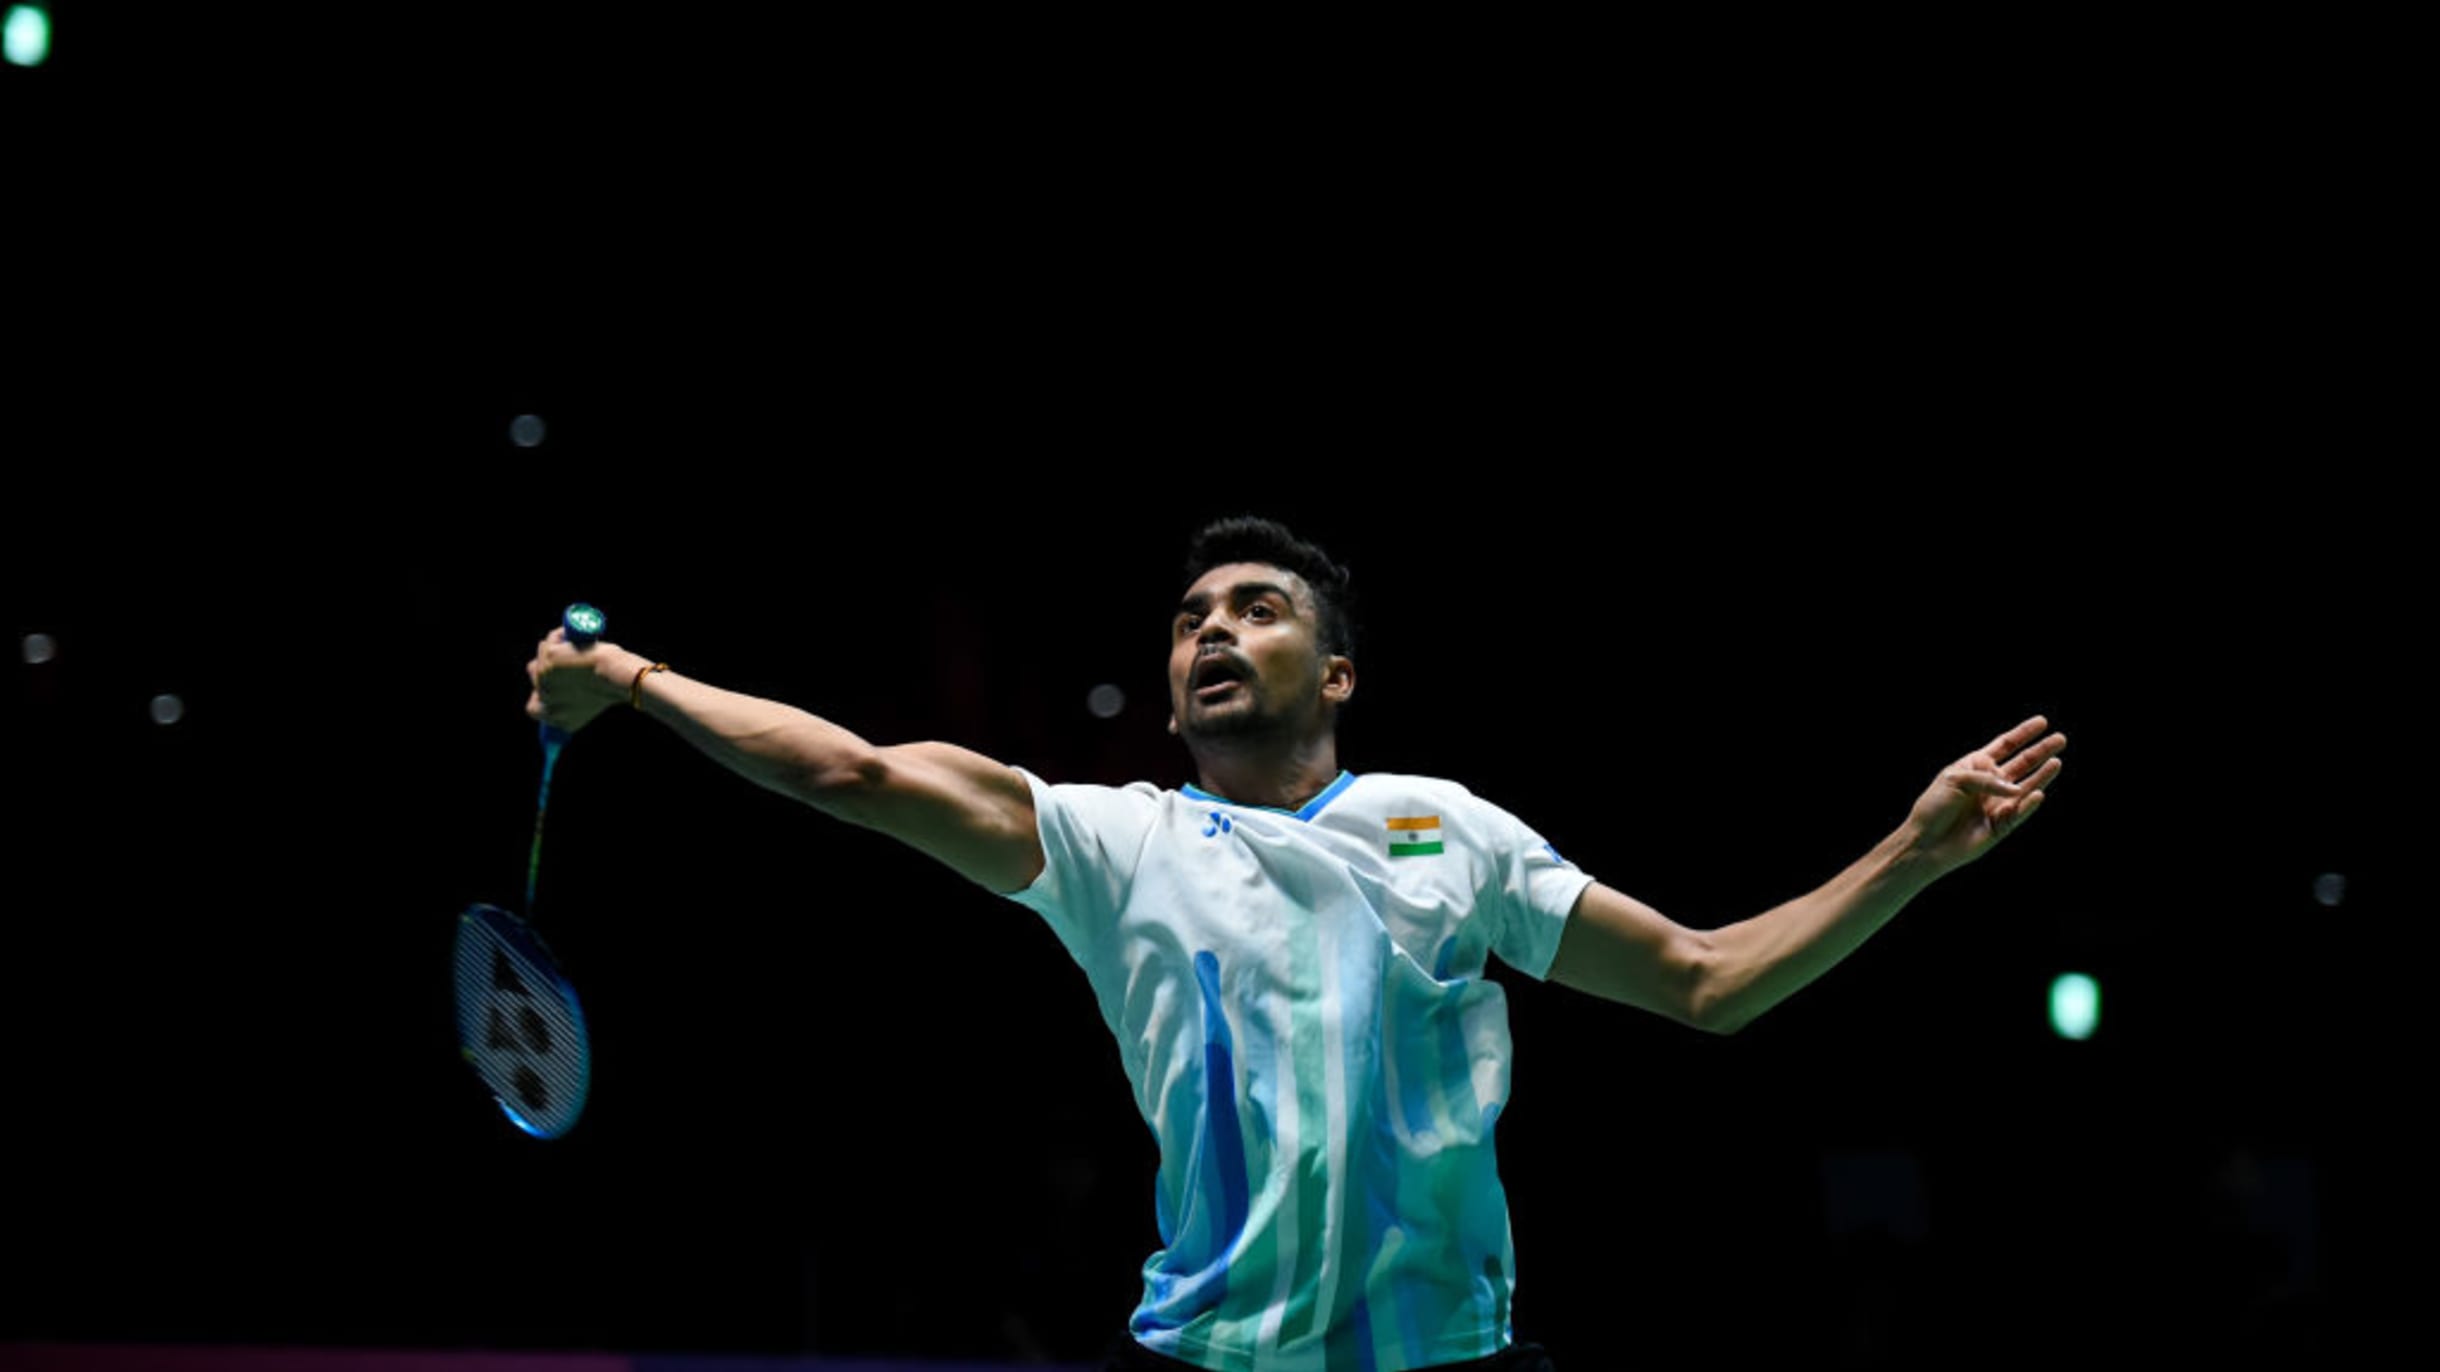 Australian Open 2022 badminton: Watch live streaming in India